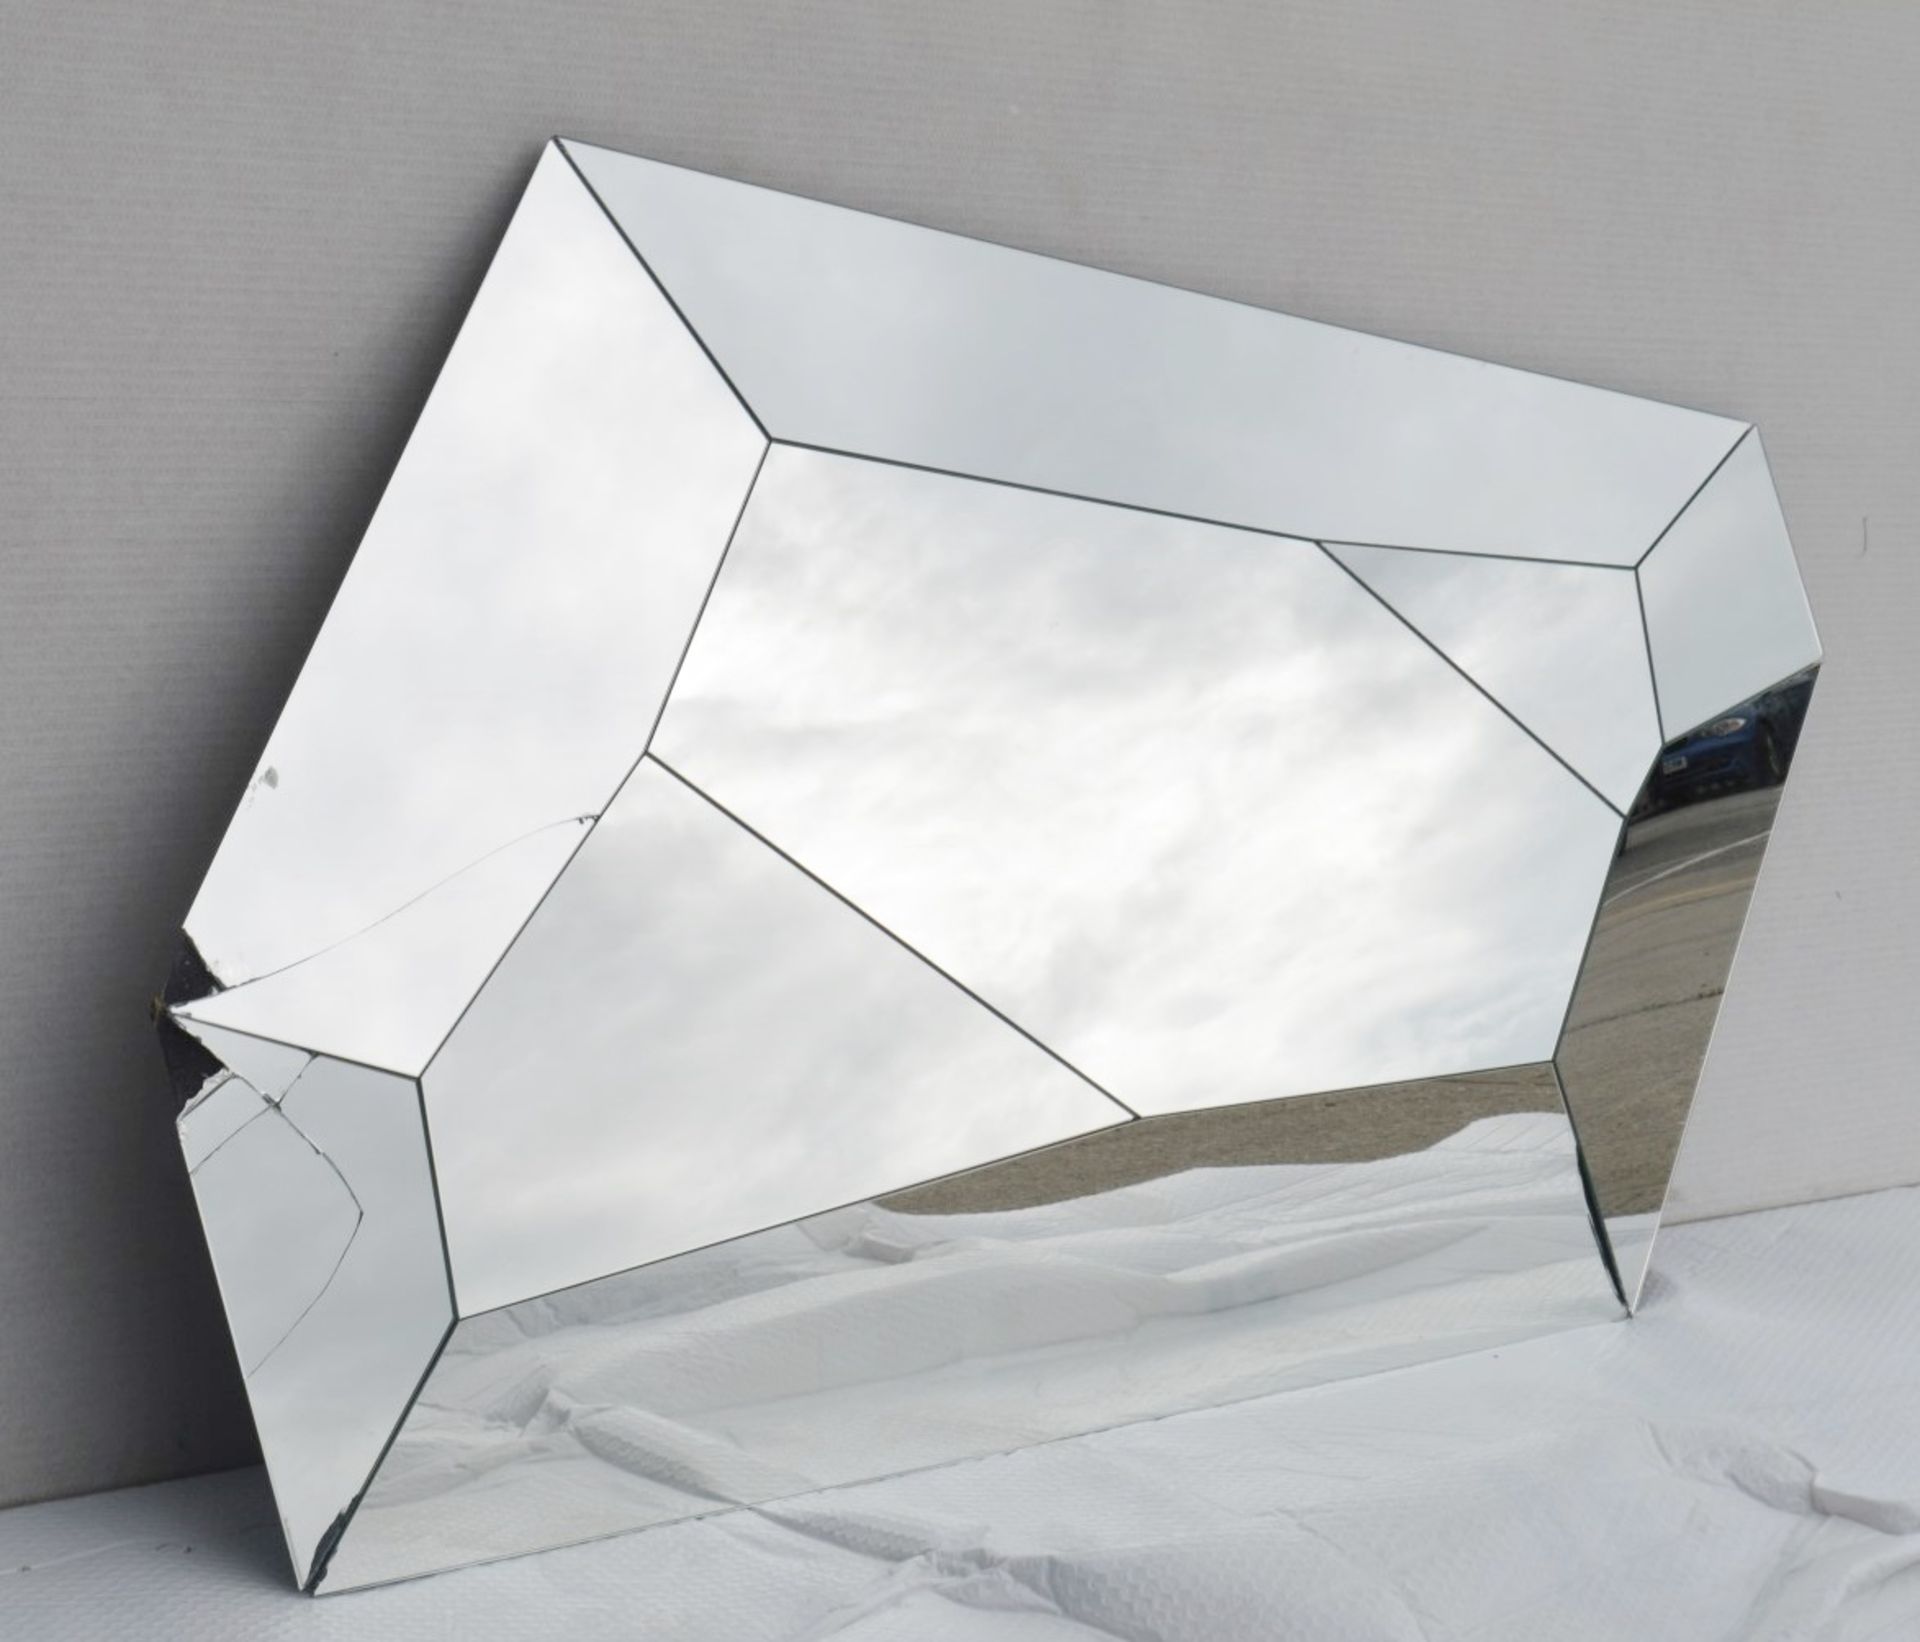 1 x CATTELAN 'Diamond' Designer Italian Wall Mirror - Dimensions: 91x164cm - Ref: 2805046/JUN21 - - Image 4 of 7